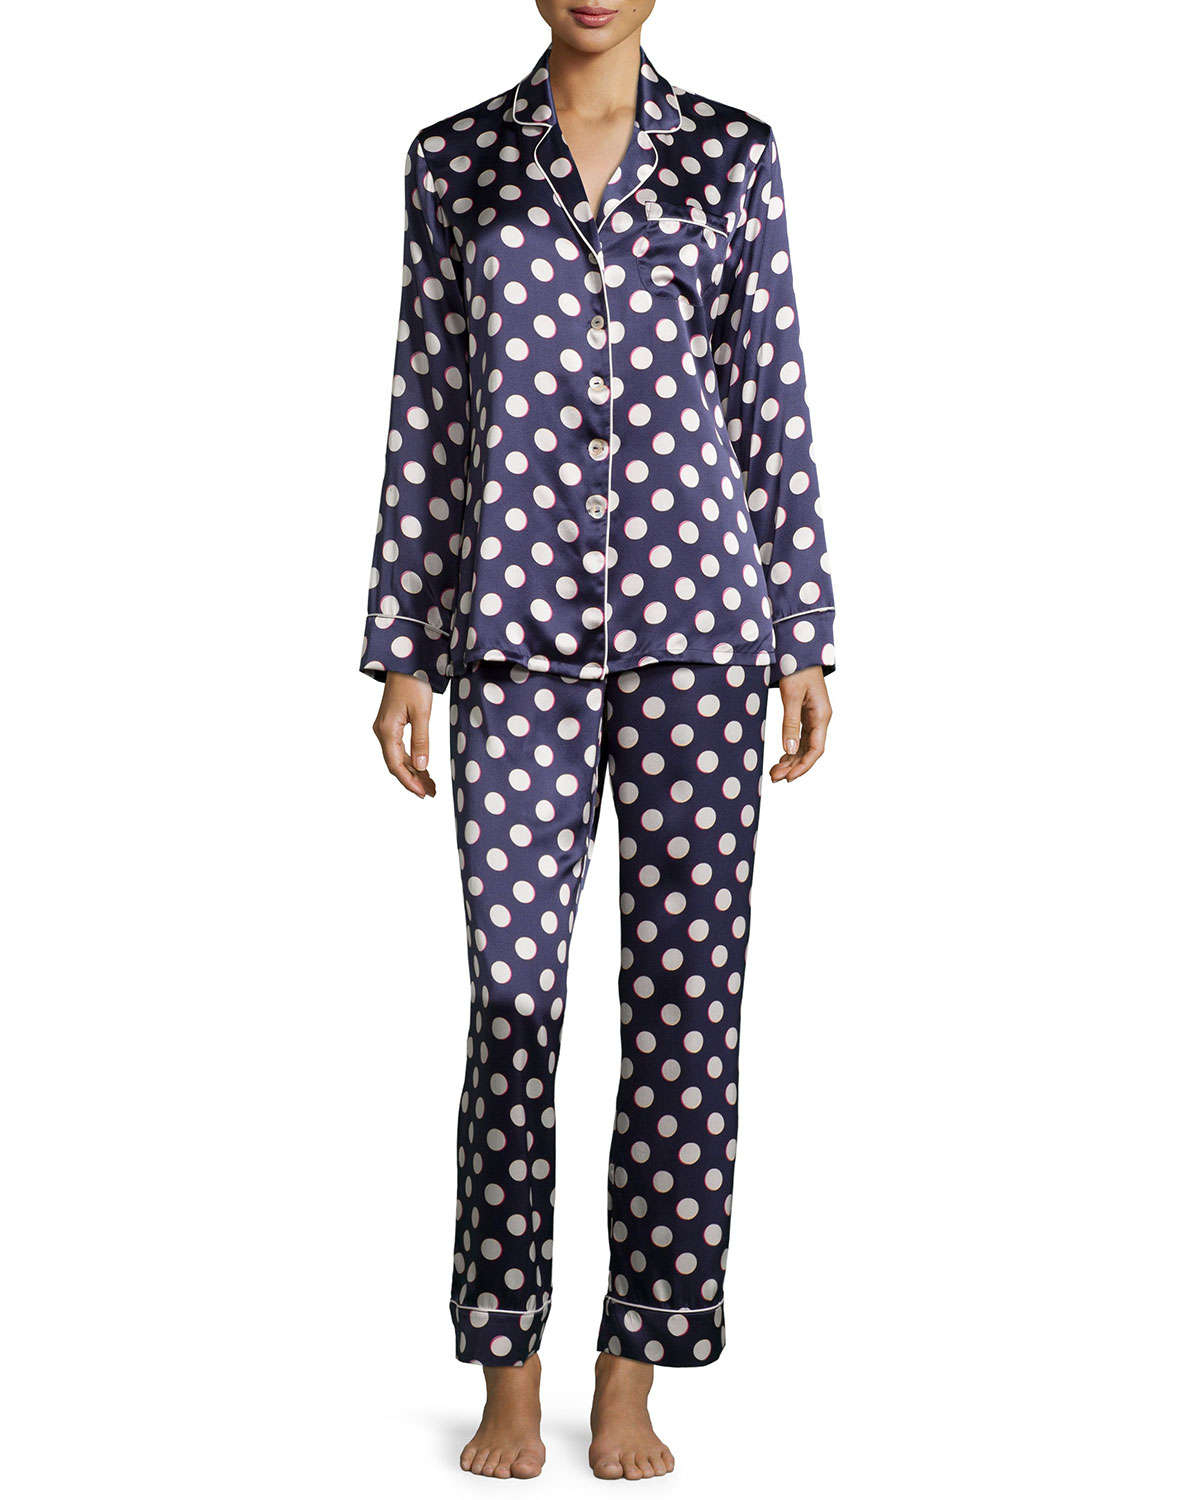 Lyst - Olivia Von Halle Lila Tomoko Polka-dot Long-sleeve Pajama Set in ...